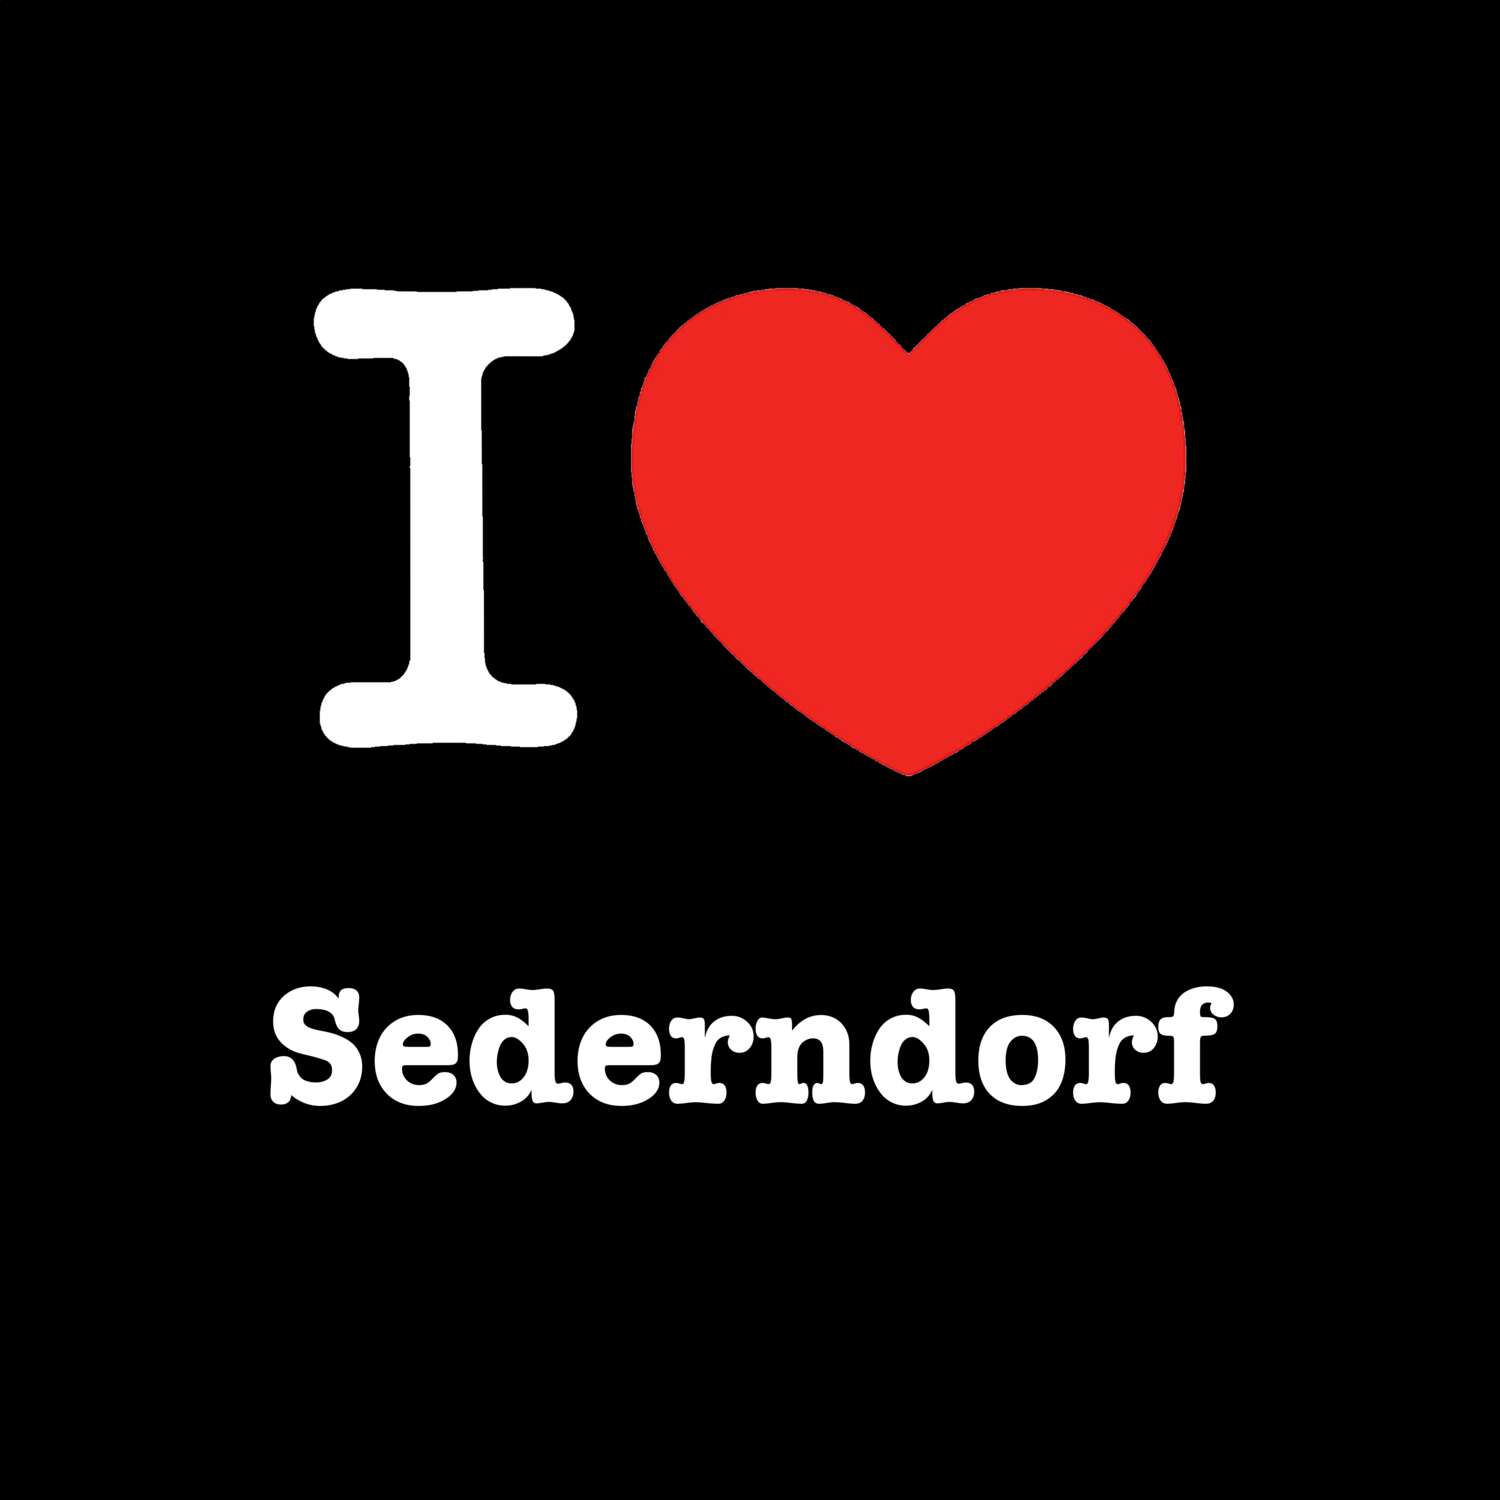 Sederndorf T-Shirt »I love«